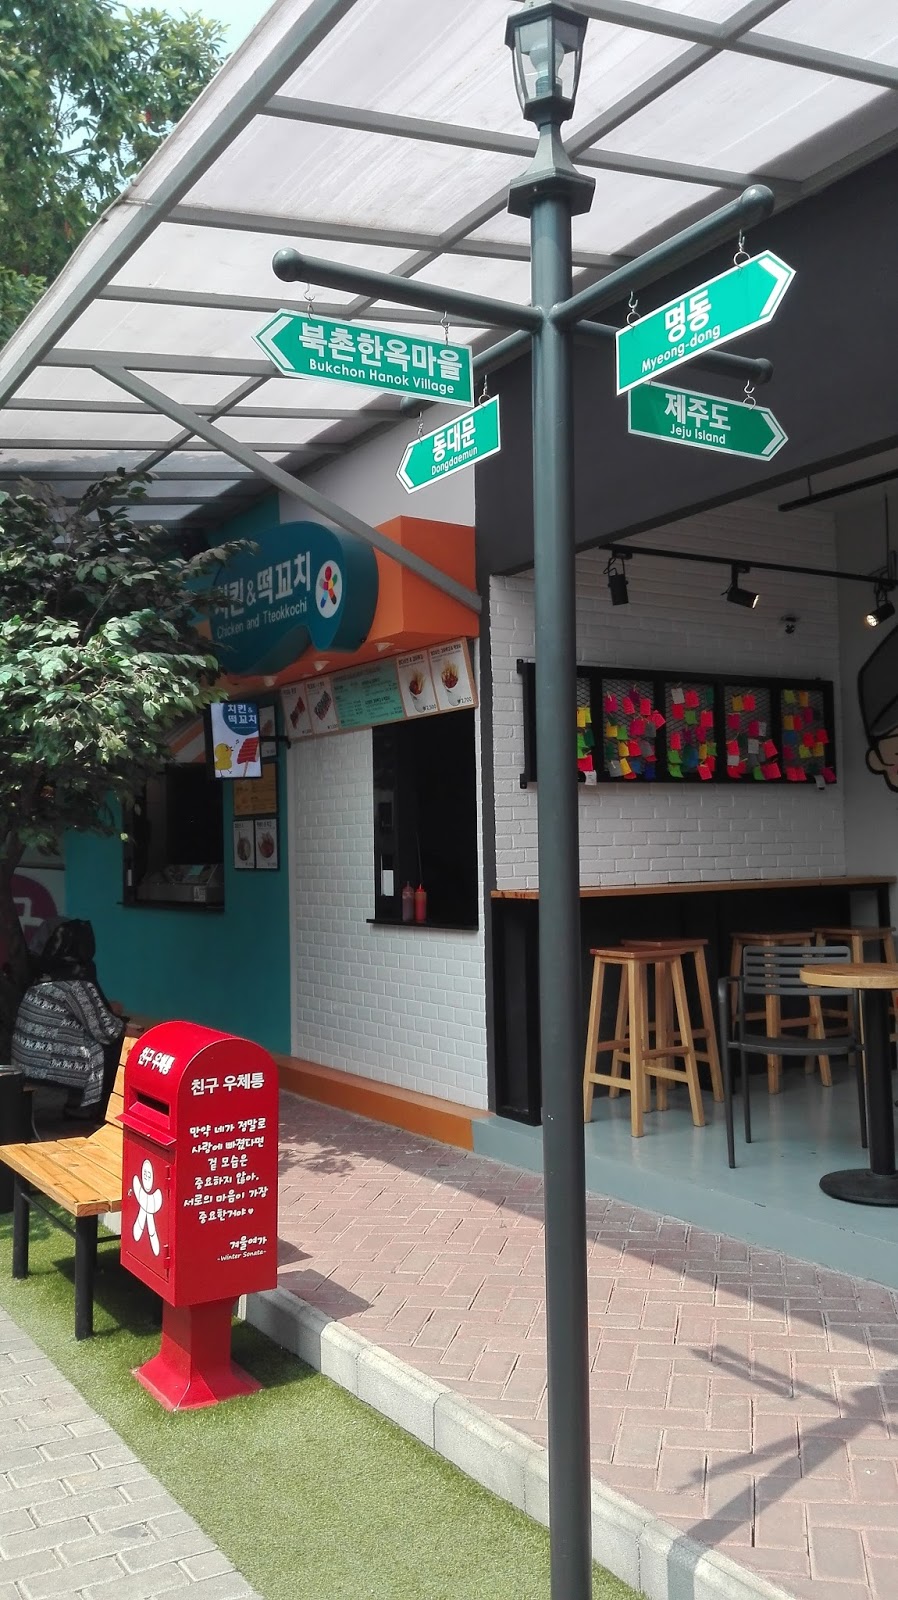  Chingu  Cafe  ala Korea di Bandung  Low Budget Travel